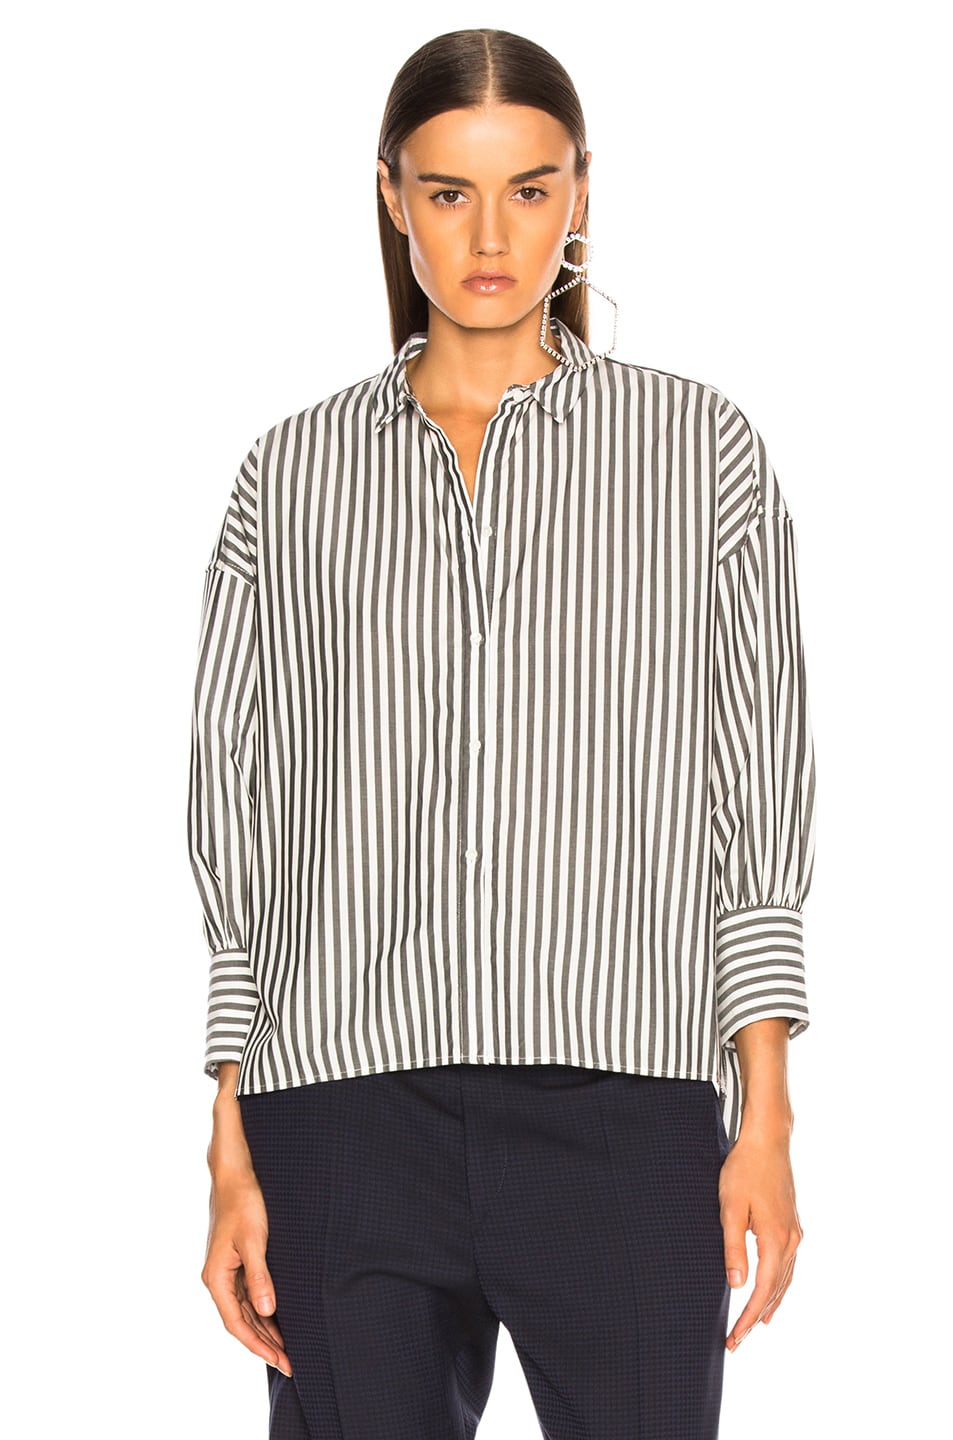 NILI LOTAN Fulton Shirt in Black & White Stripe | FWRD